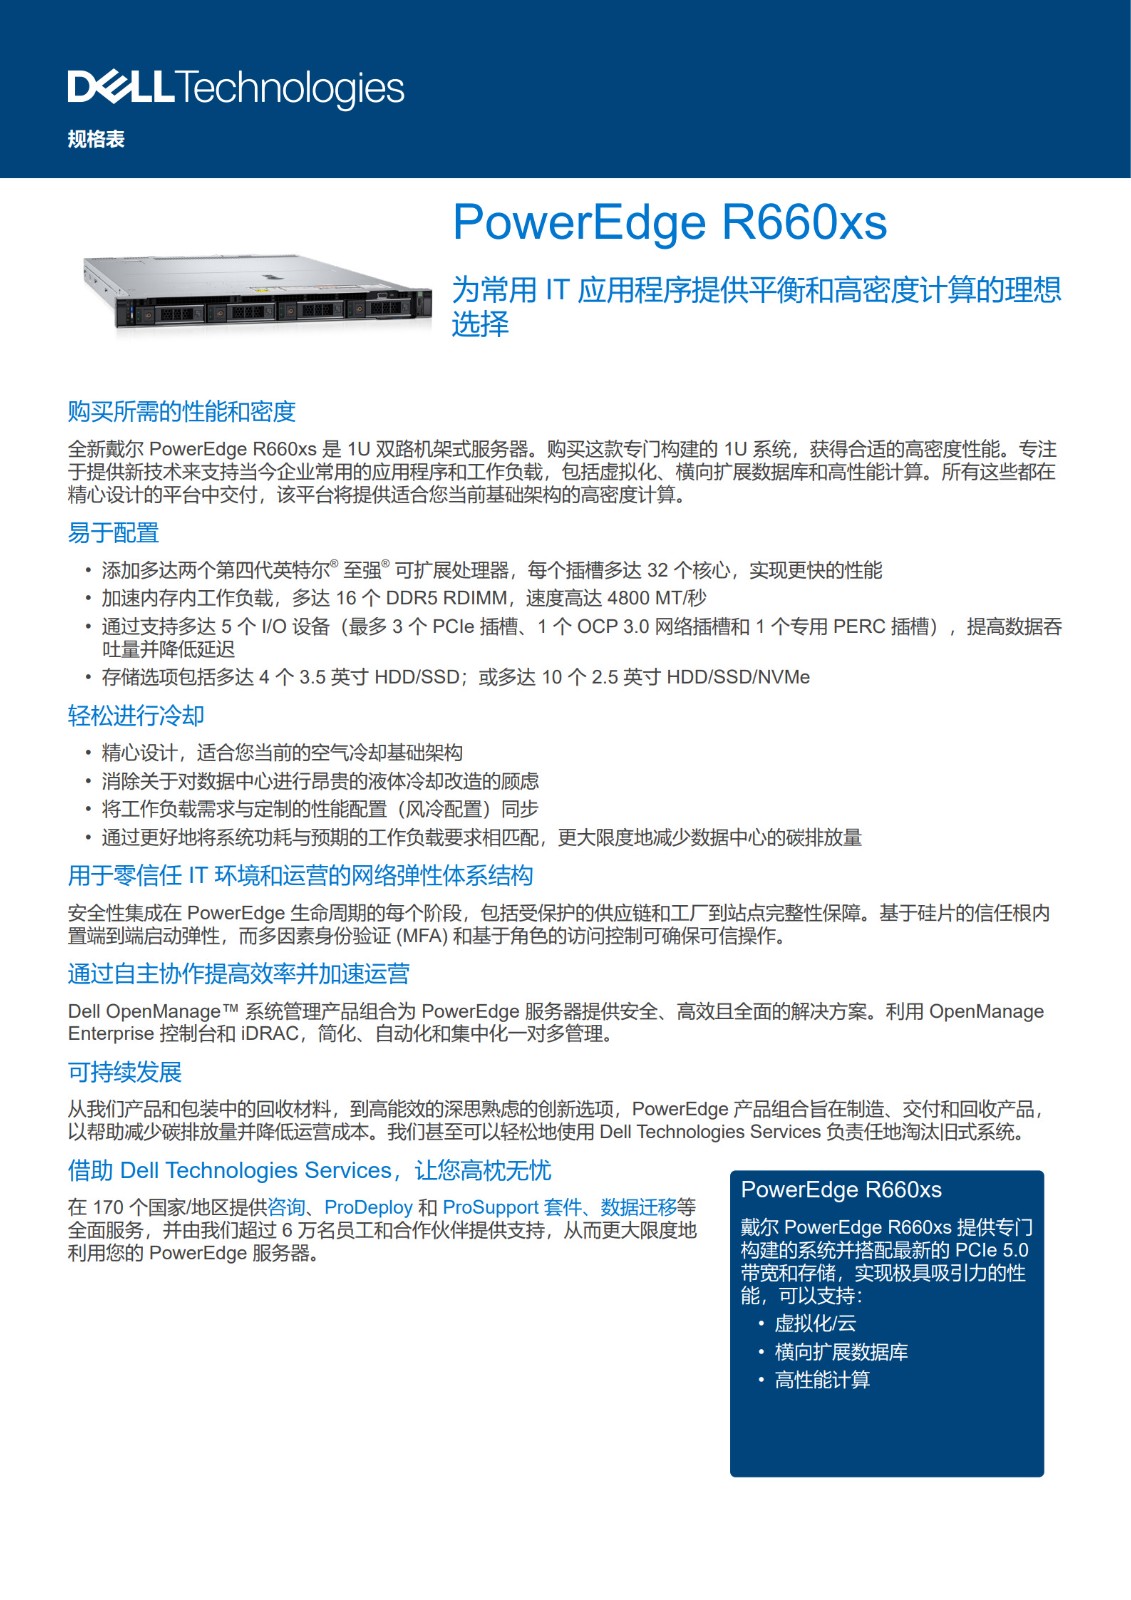 Dell PowerEdge-R660xs-Spec-Sheet_CN_1.jpg